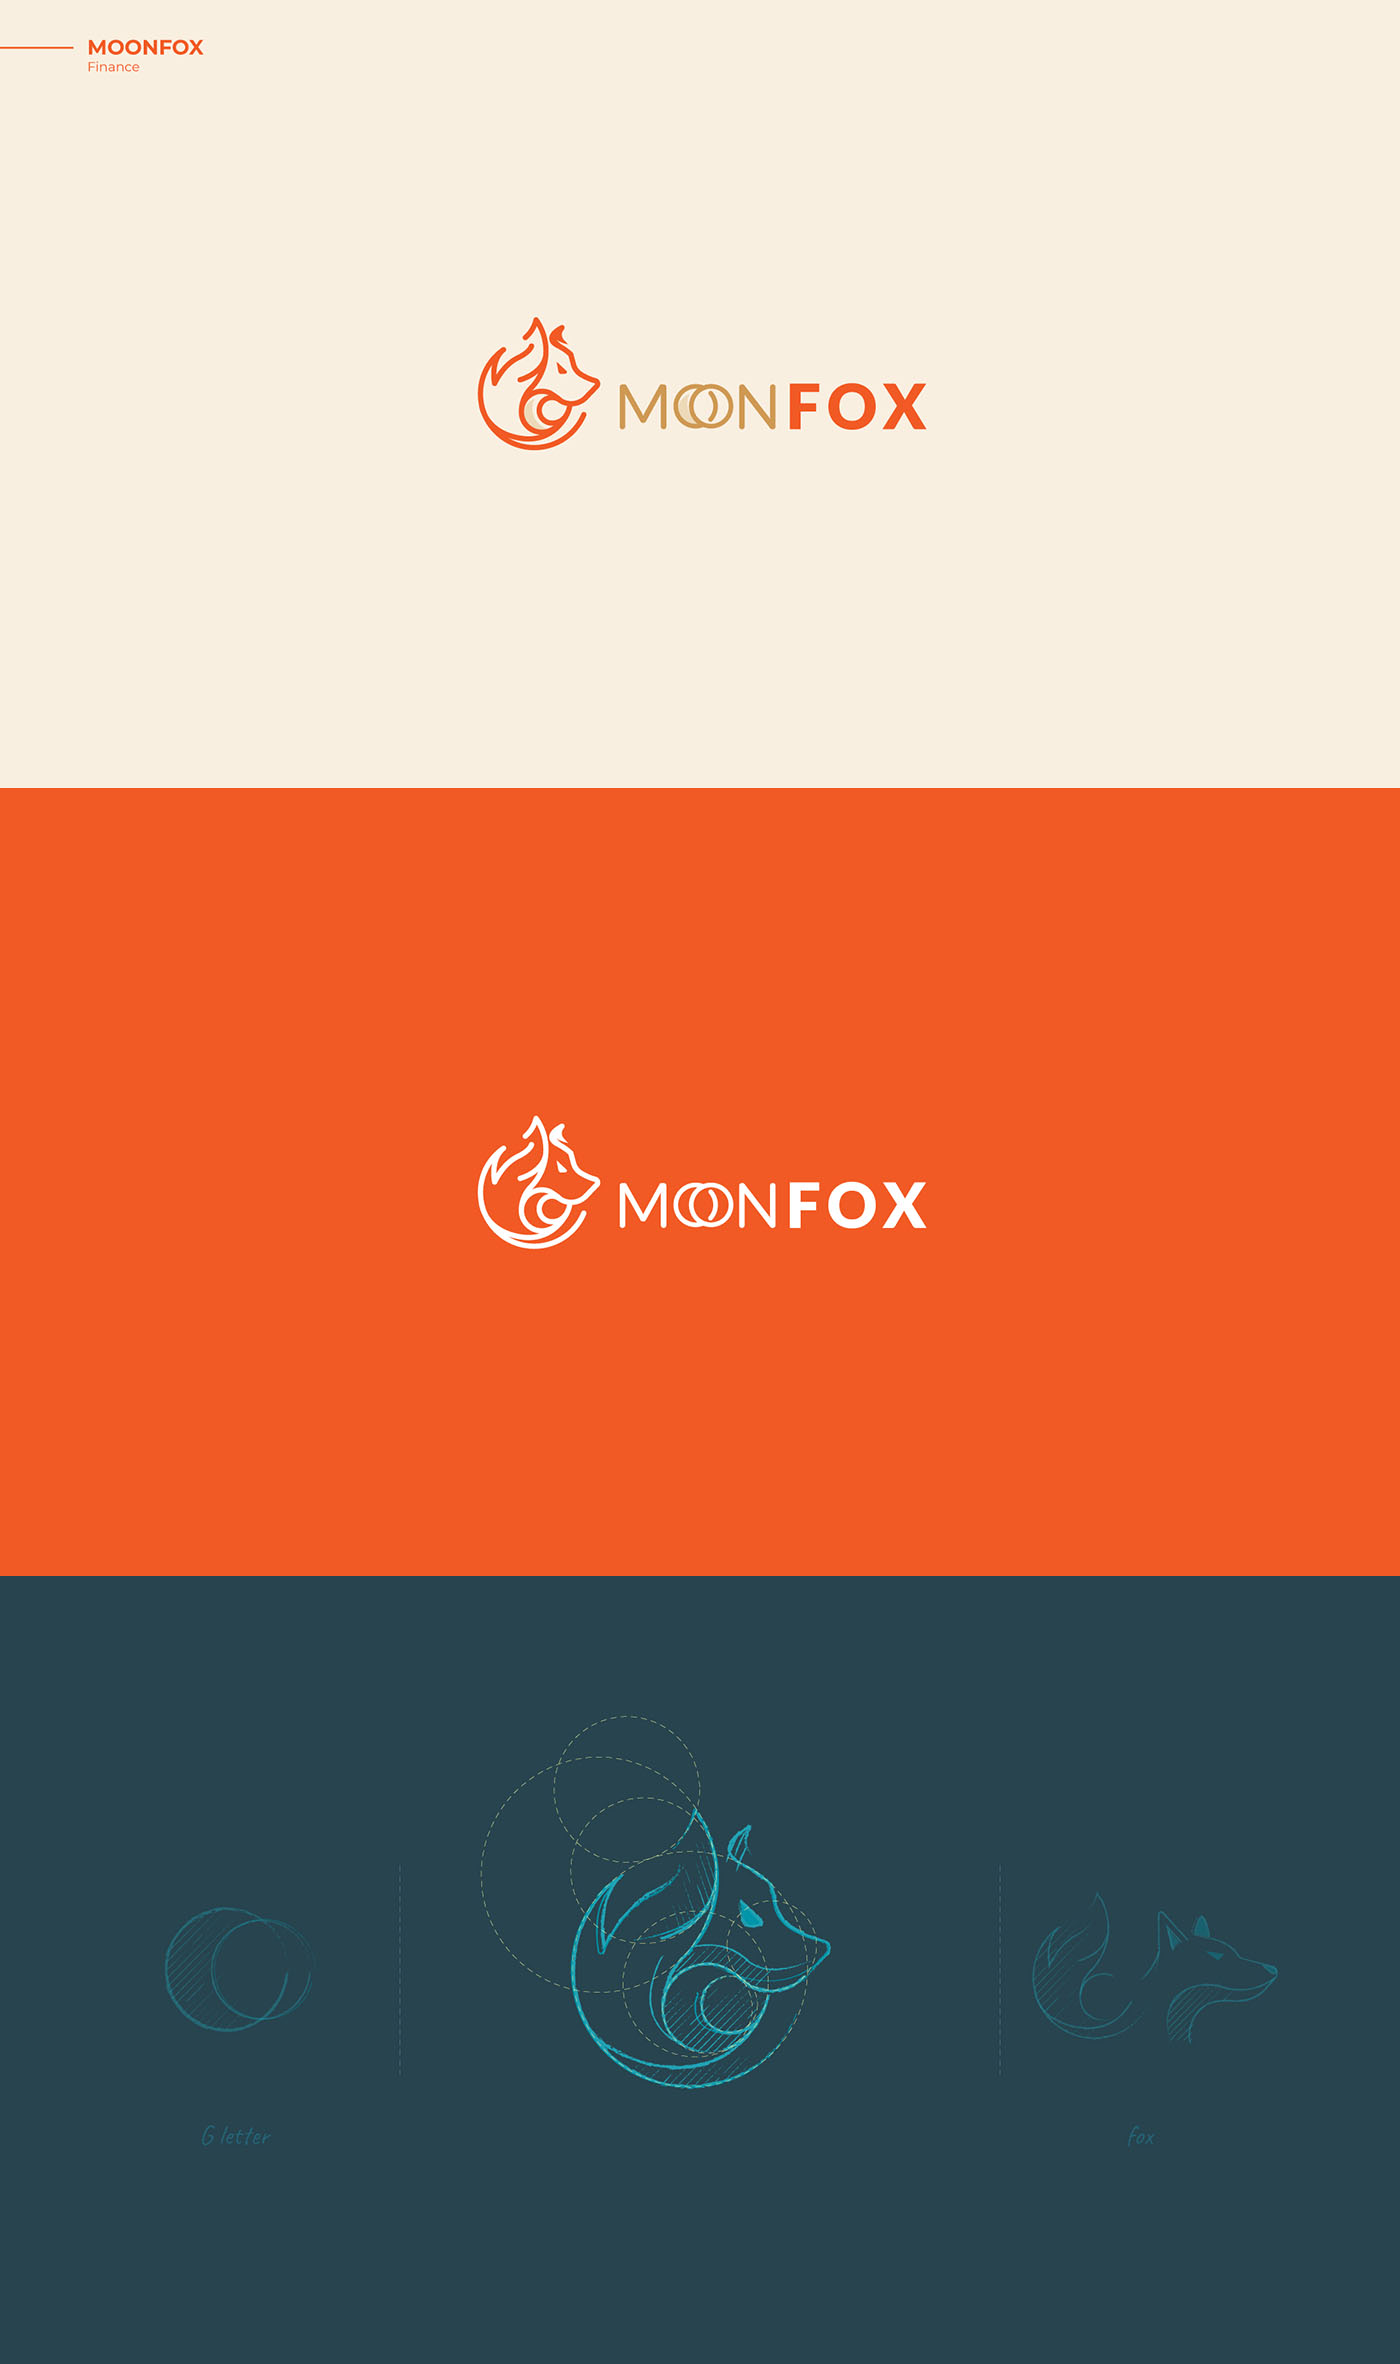 Moon Fox logo design - portfolio by DAINOGO